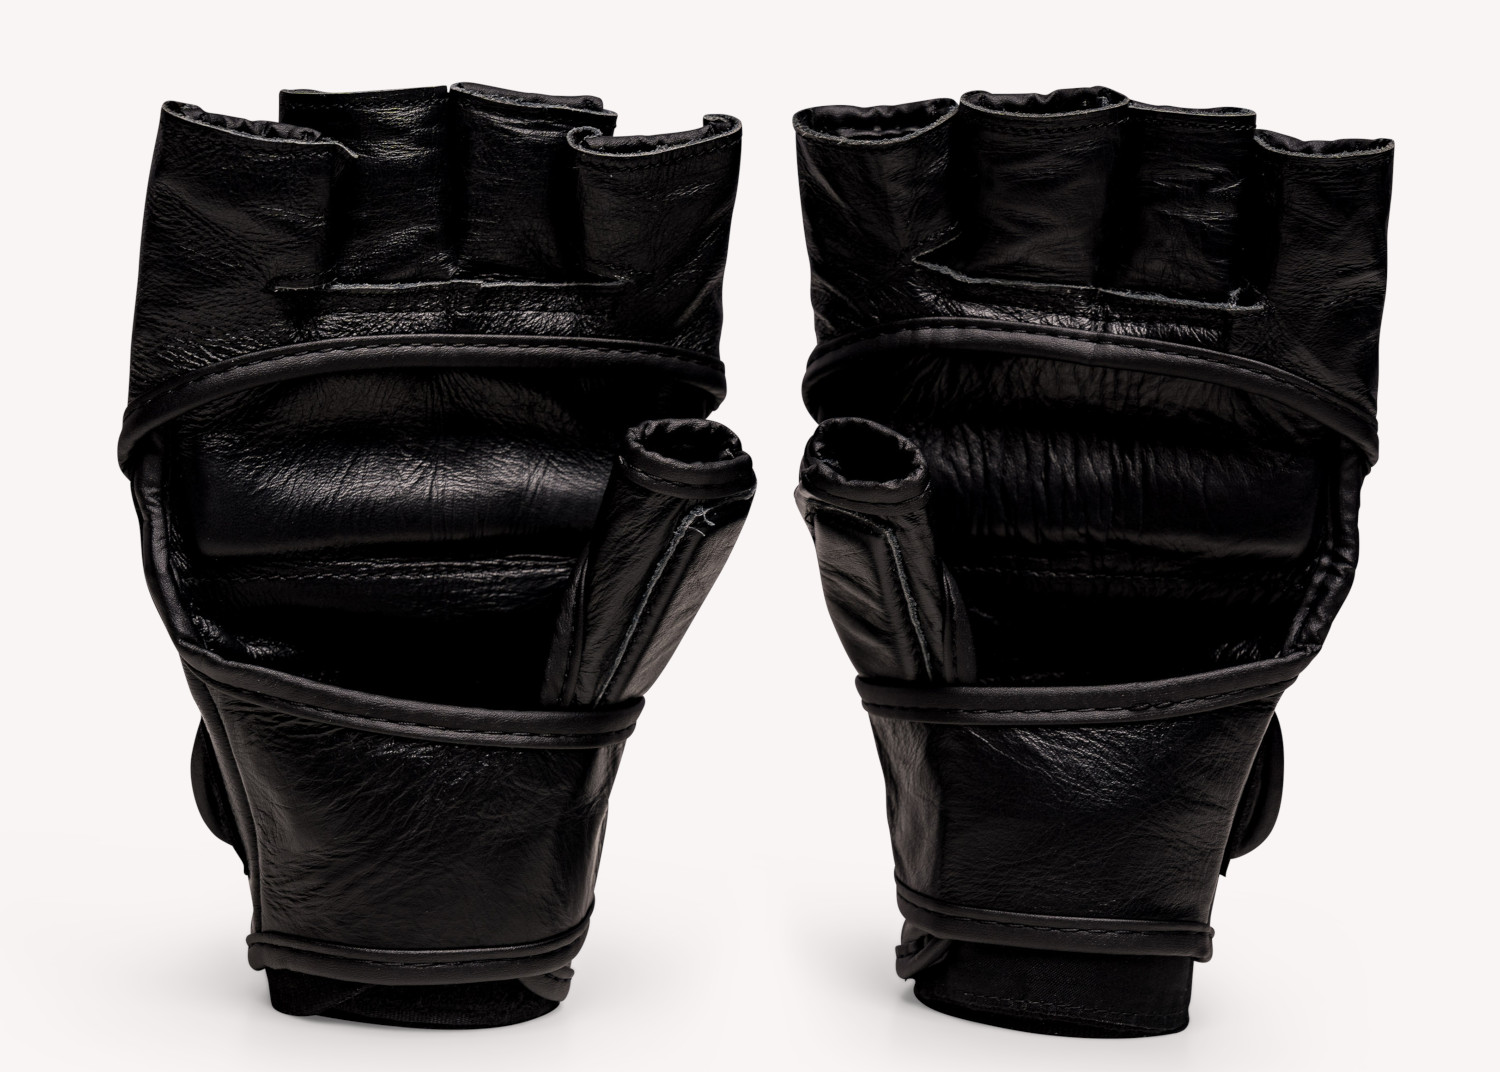 okami fightgear MMA Martial Distribution - Professional United Fightwear Arts Pro Fight - Gloves